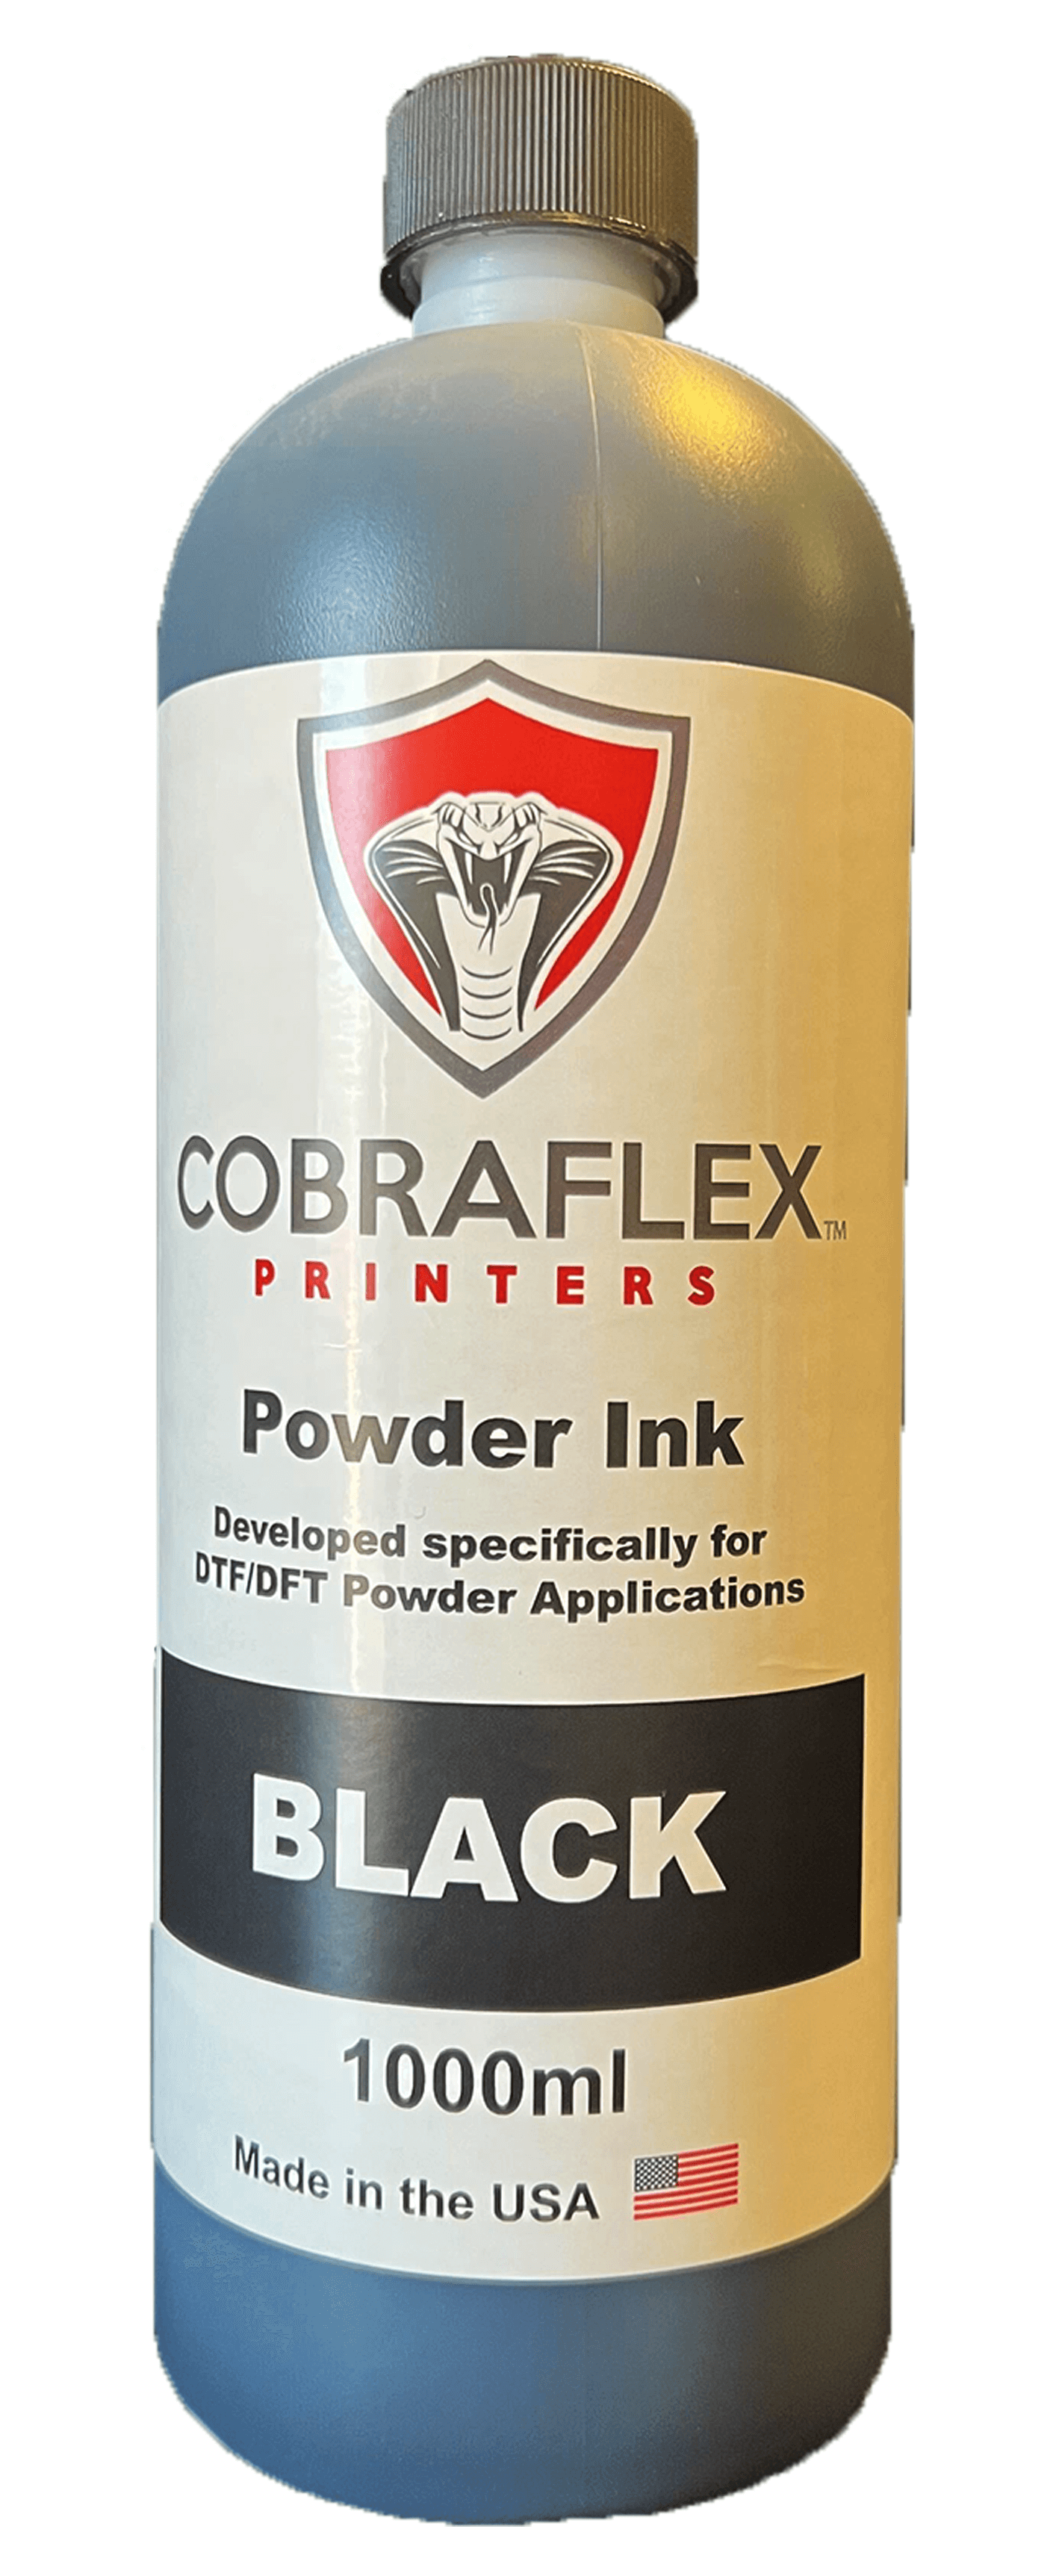 Cobraflex black powder ink